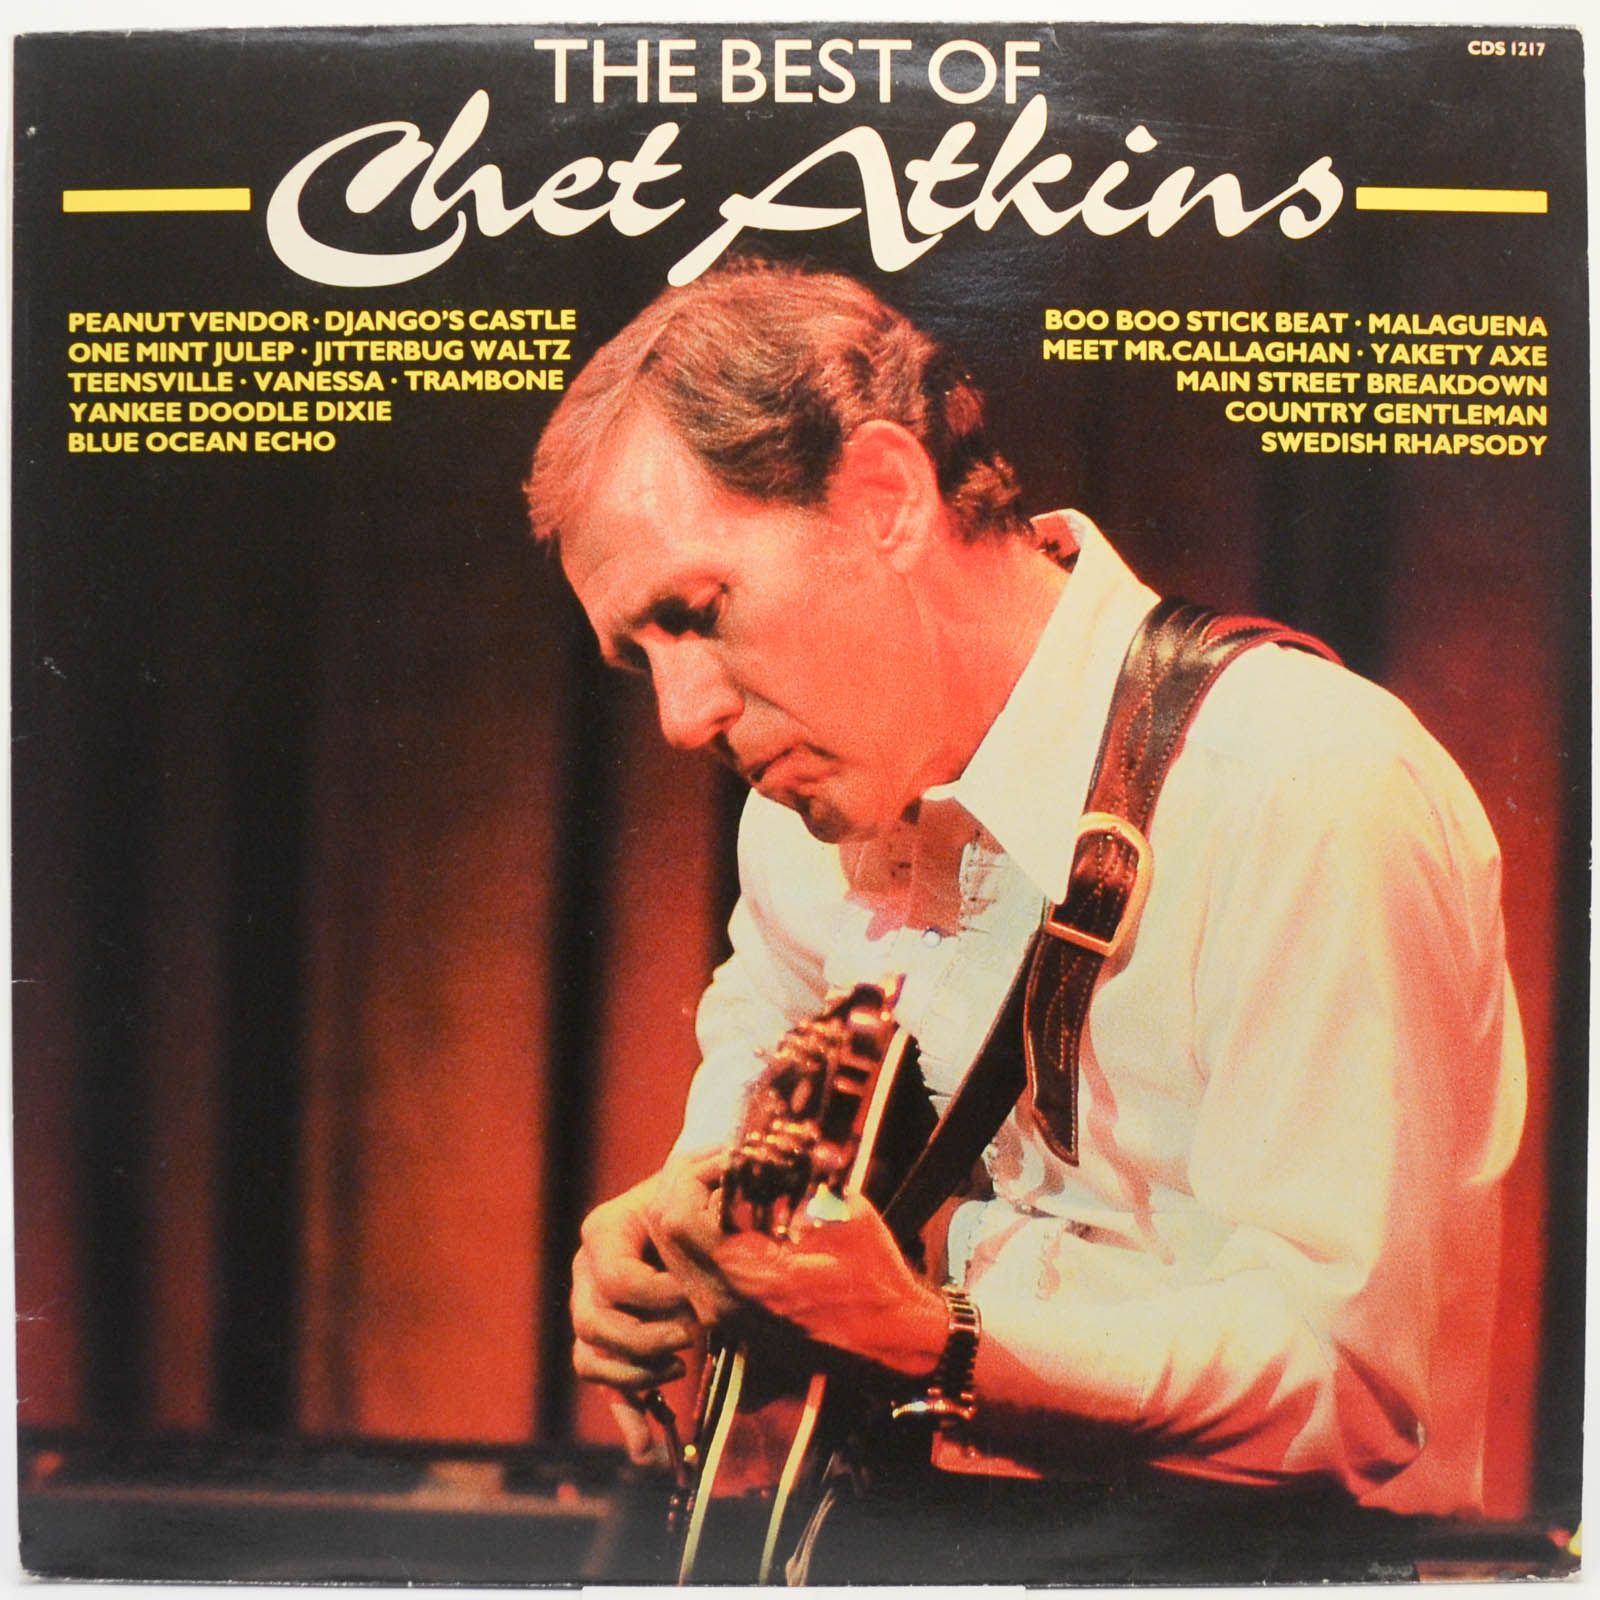 Chet Atkins — The Best Of Chet Atkins (UK), 1982